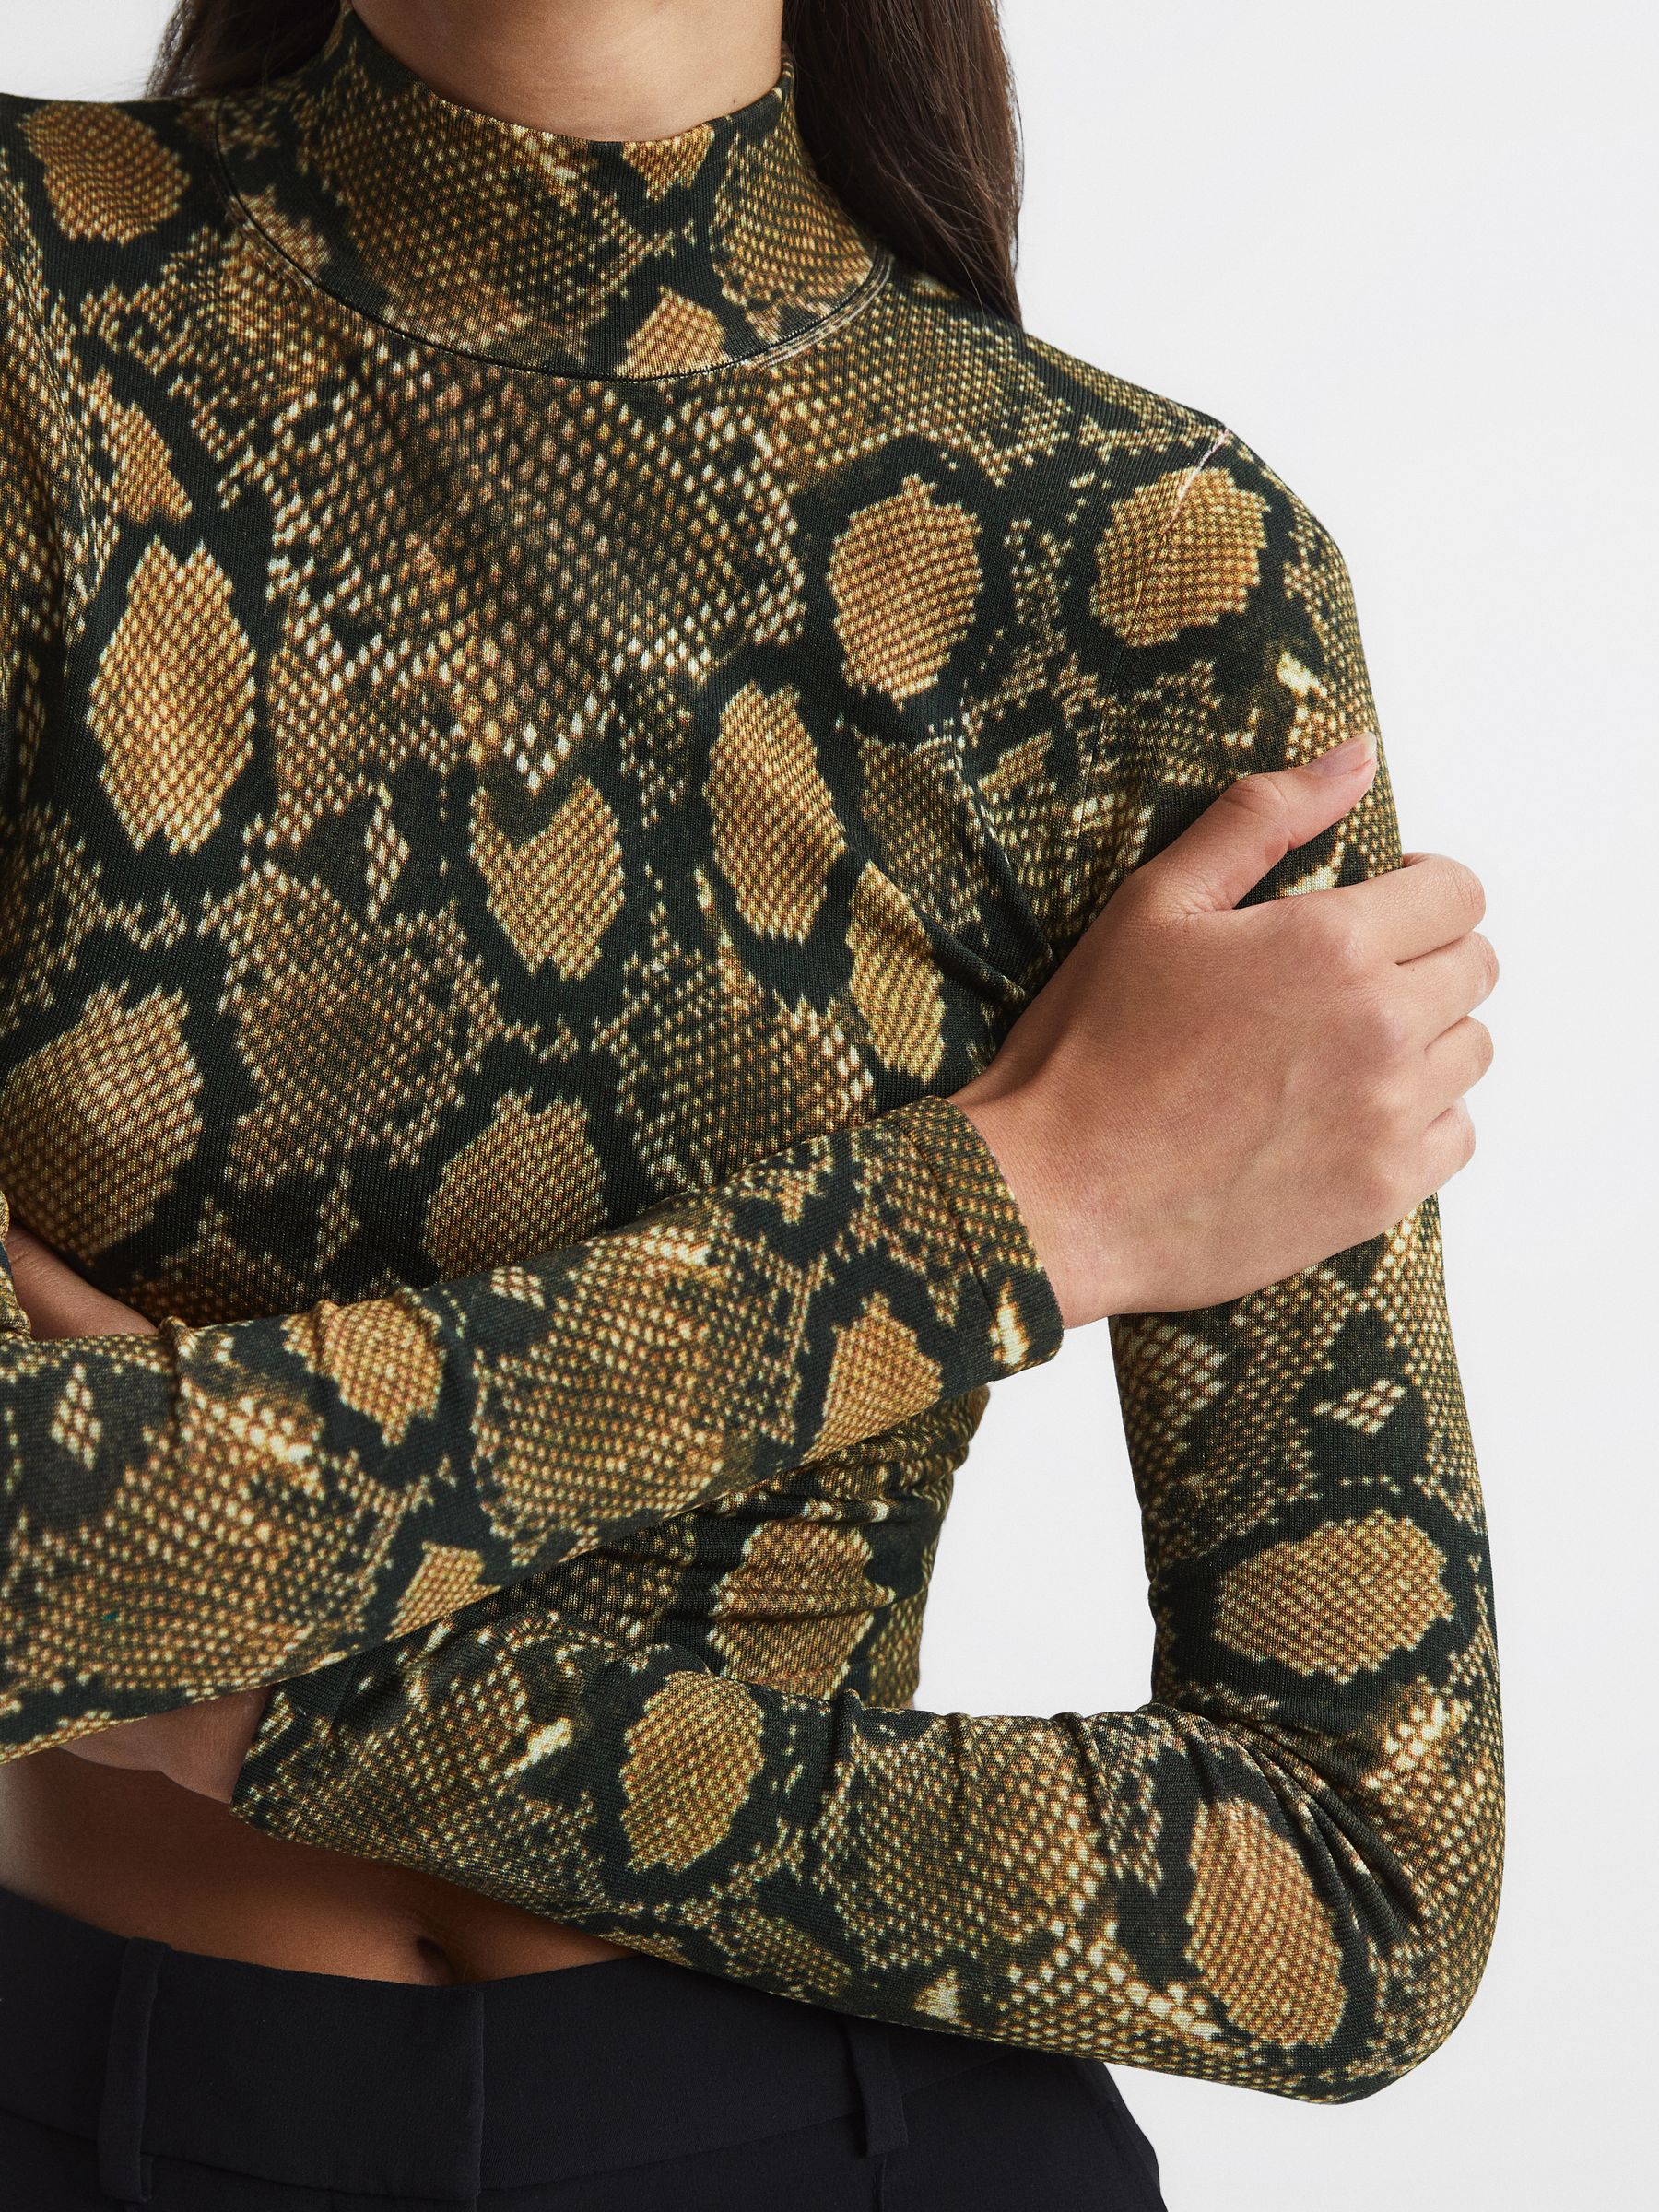 Reiss Farah Snake Print Knitted Top - REISS